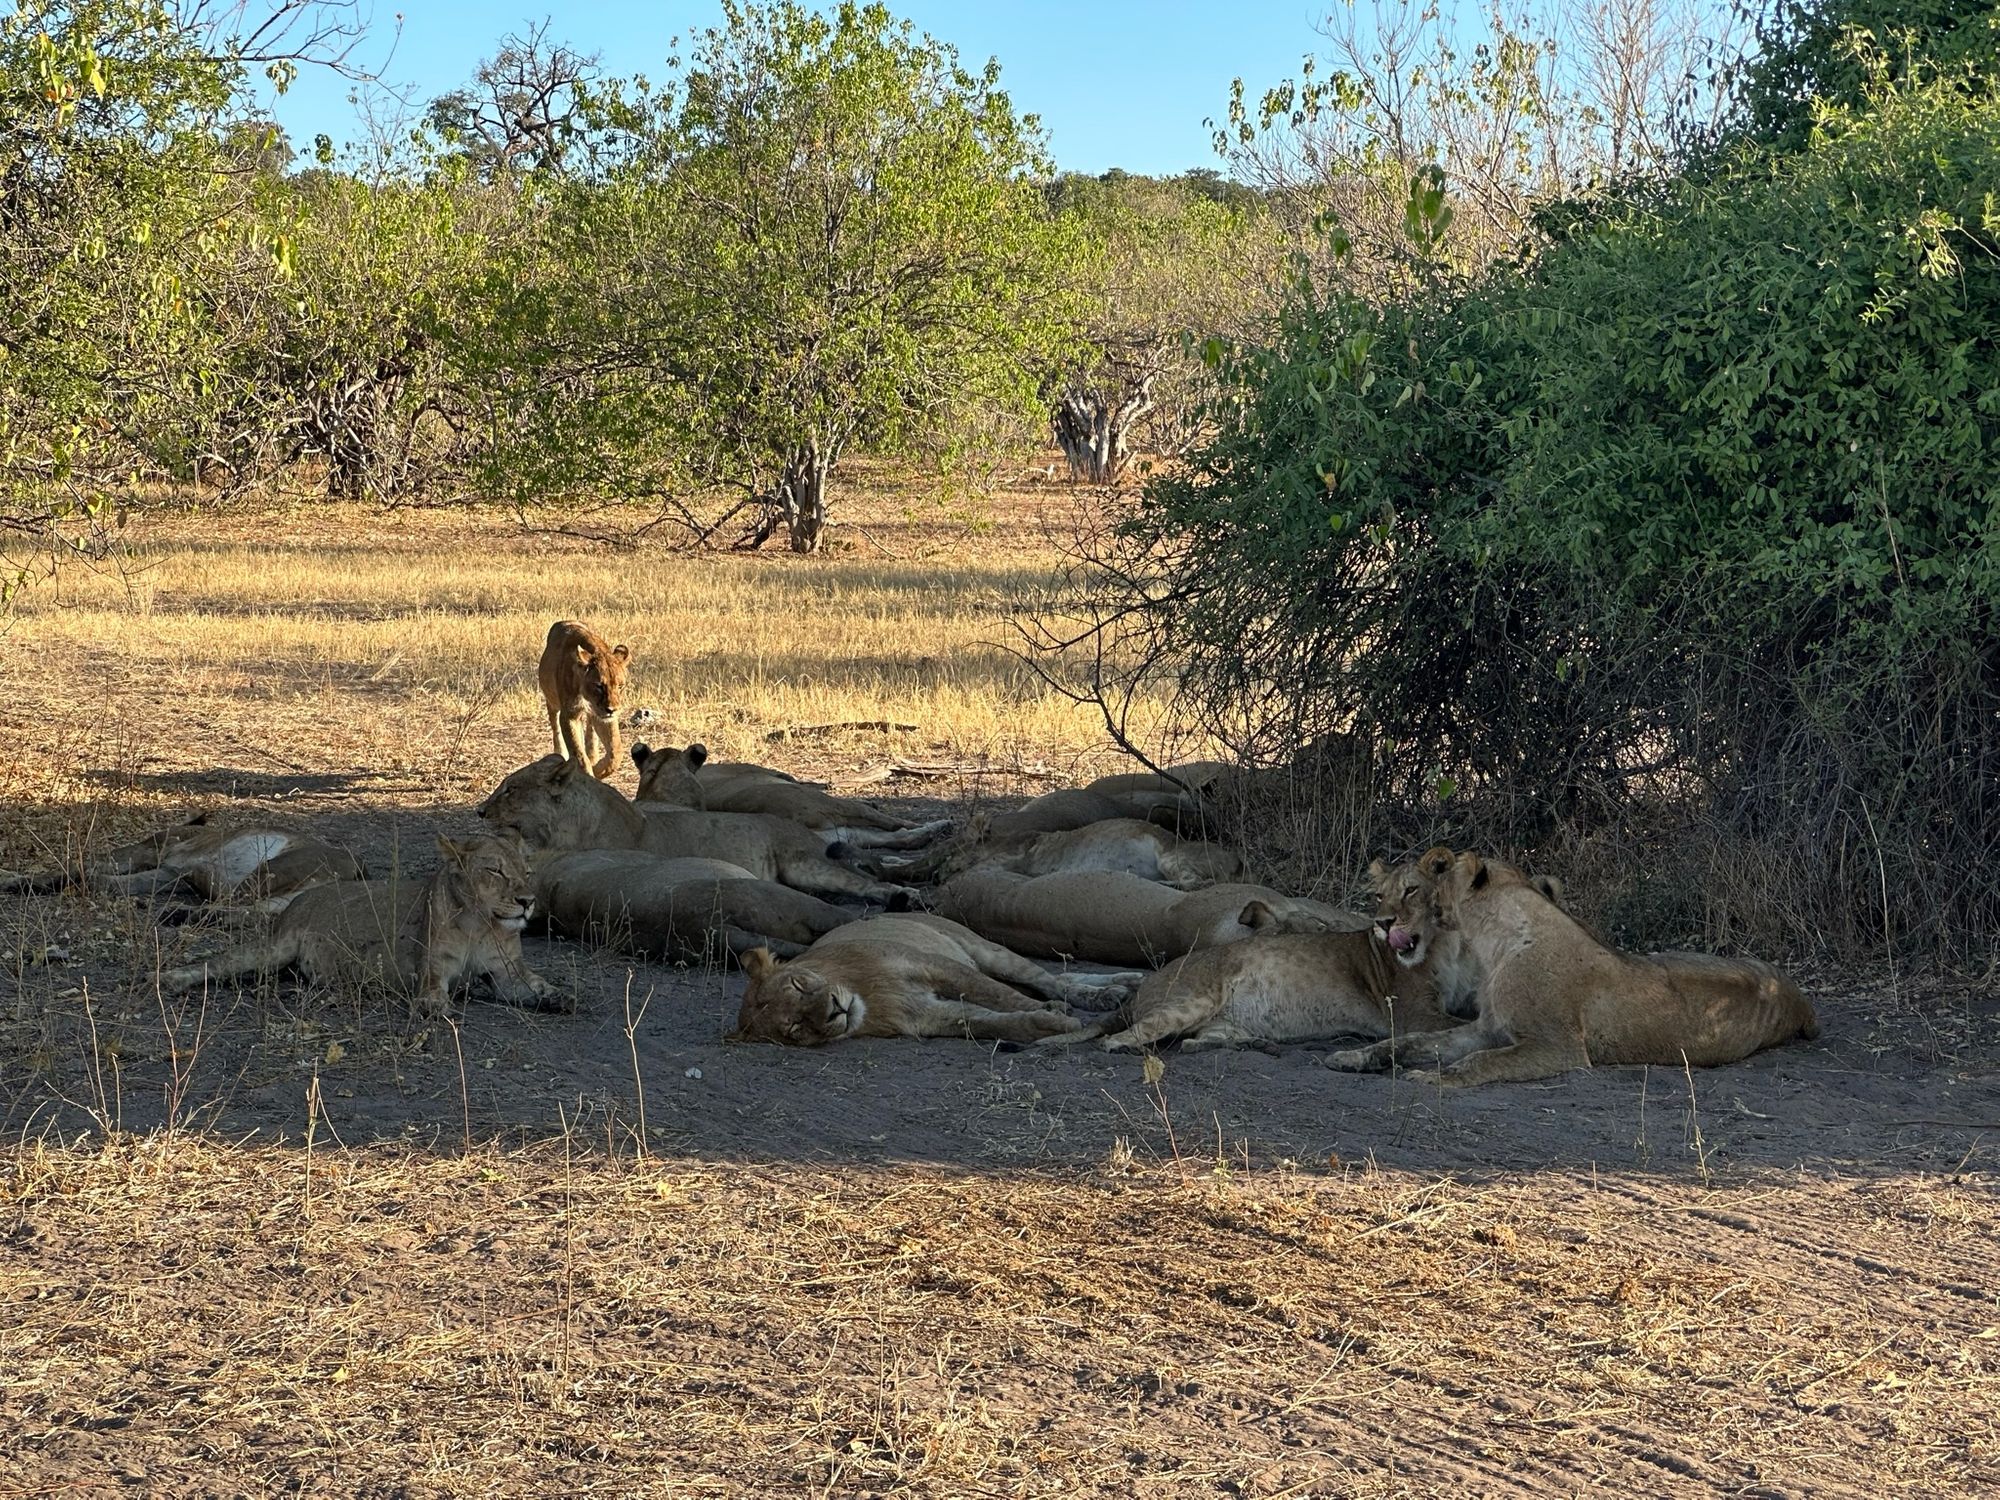 Lions sleeping in the shade in Chobe National Park, Botswana.